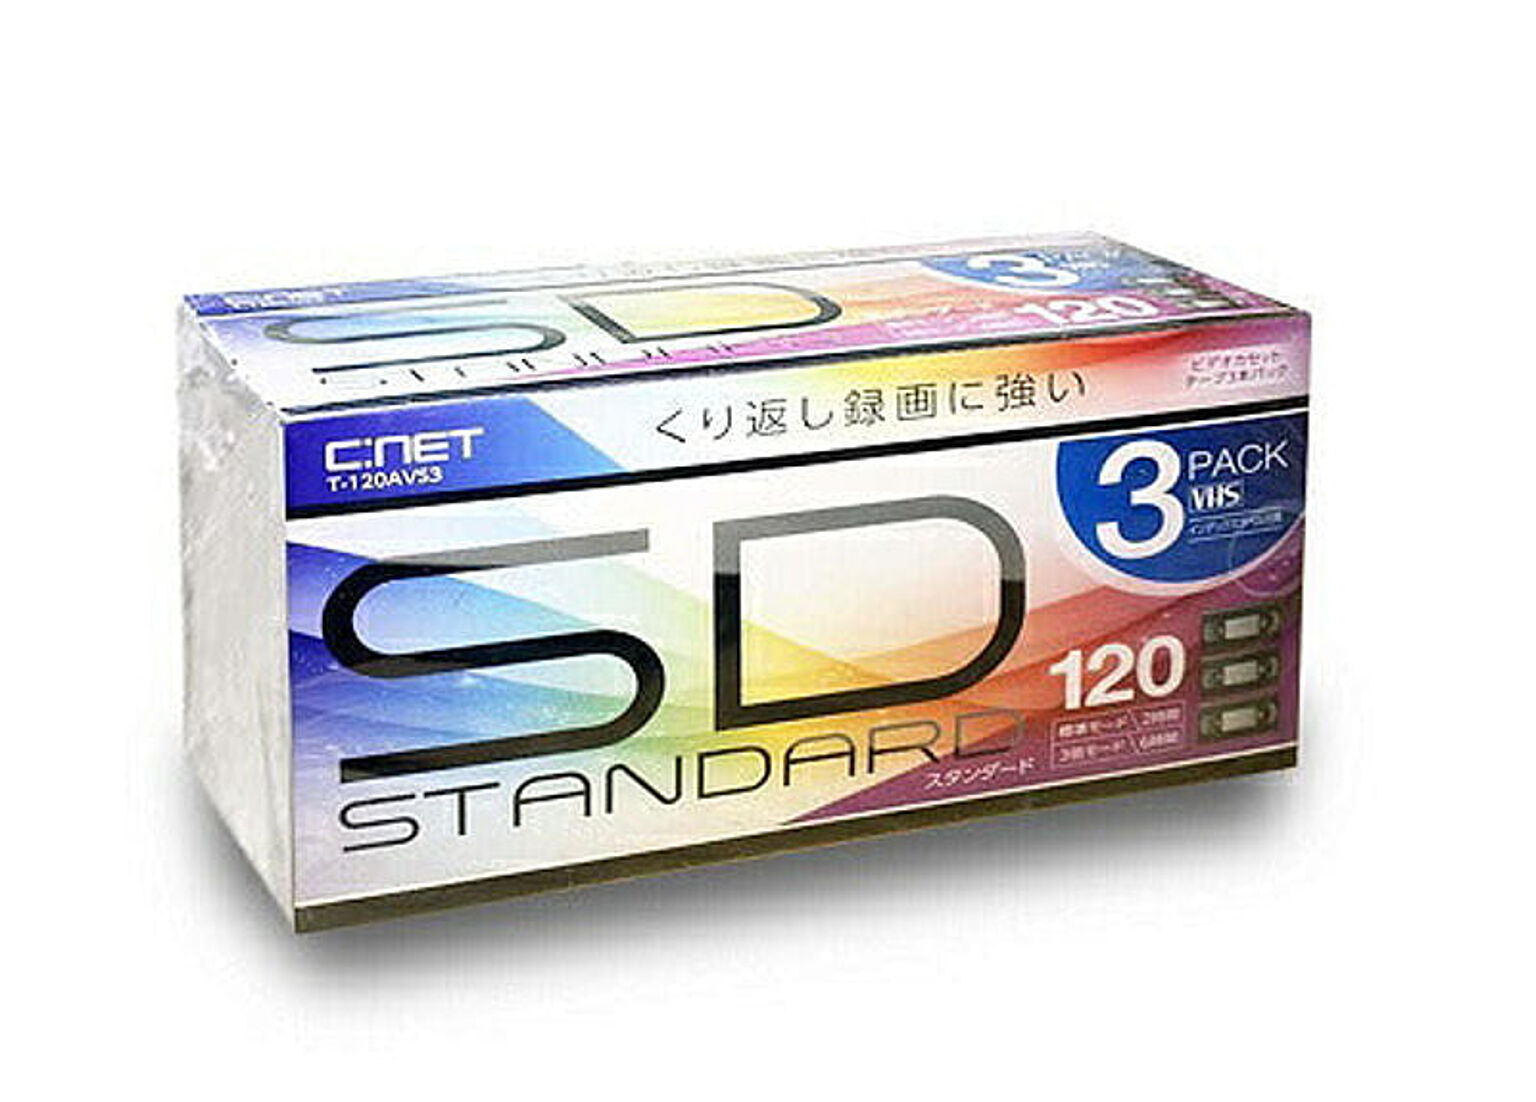 C:NET ビデオテープ スタンダード 120分 3巻 T-120AVS3 管理No. 4571102090092